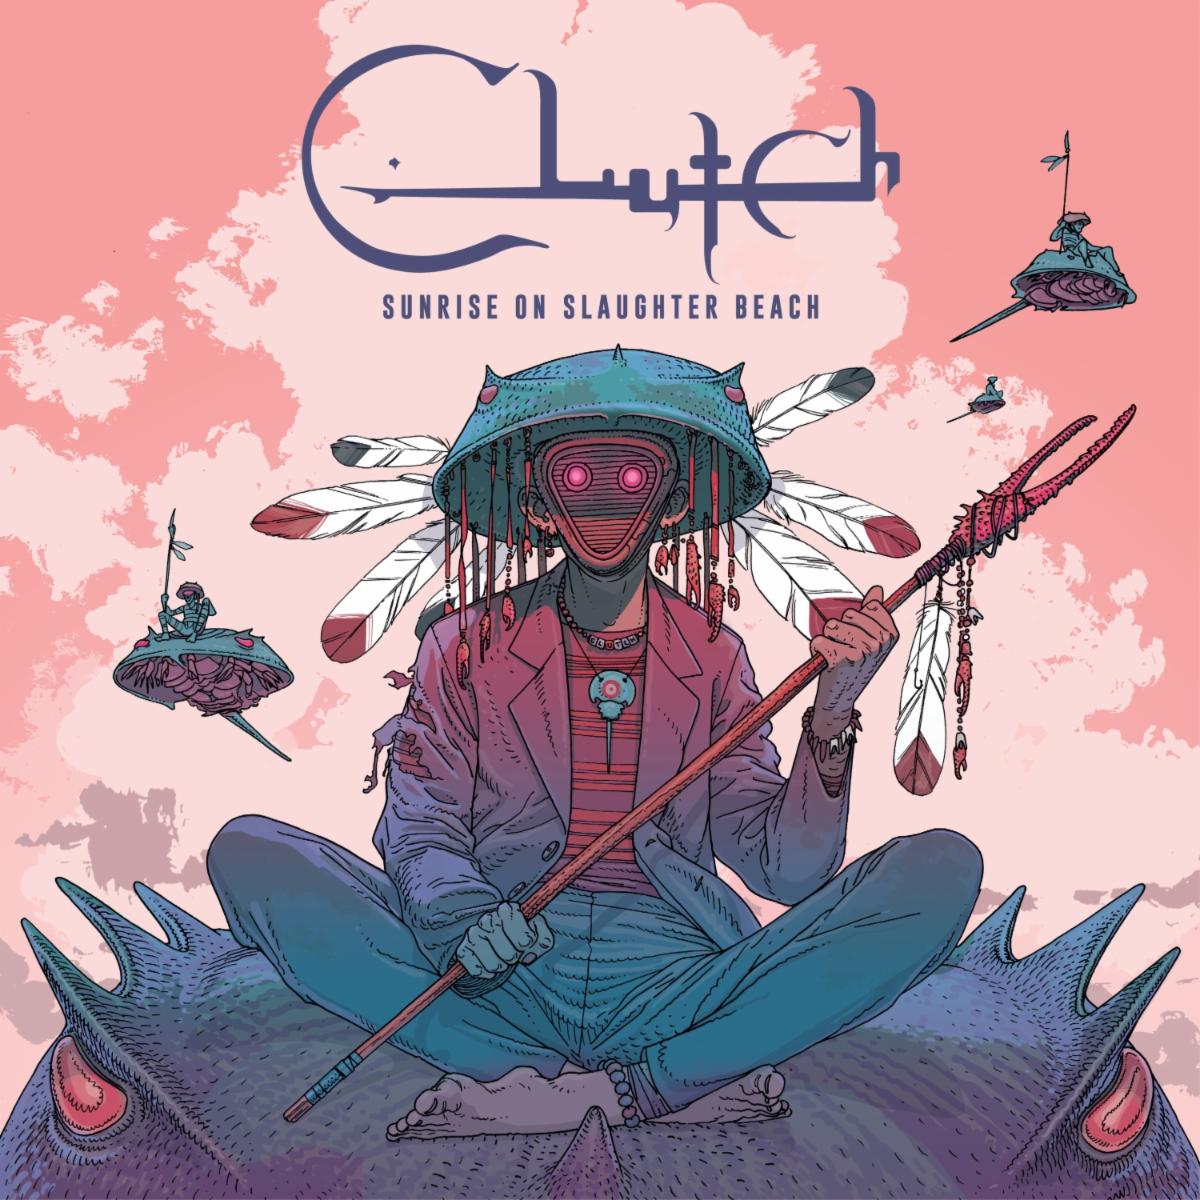 CLUTCH Announce New Album 'Sunrise On Slaughter Beach'